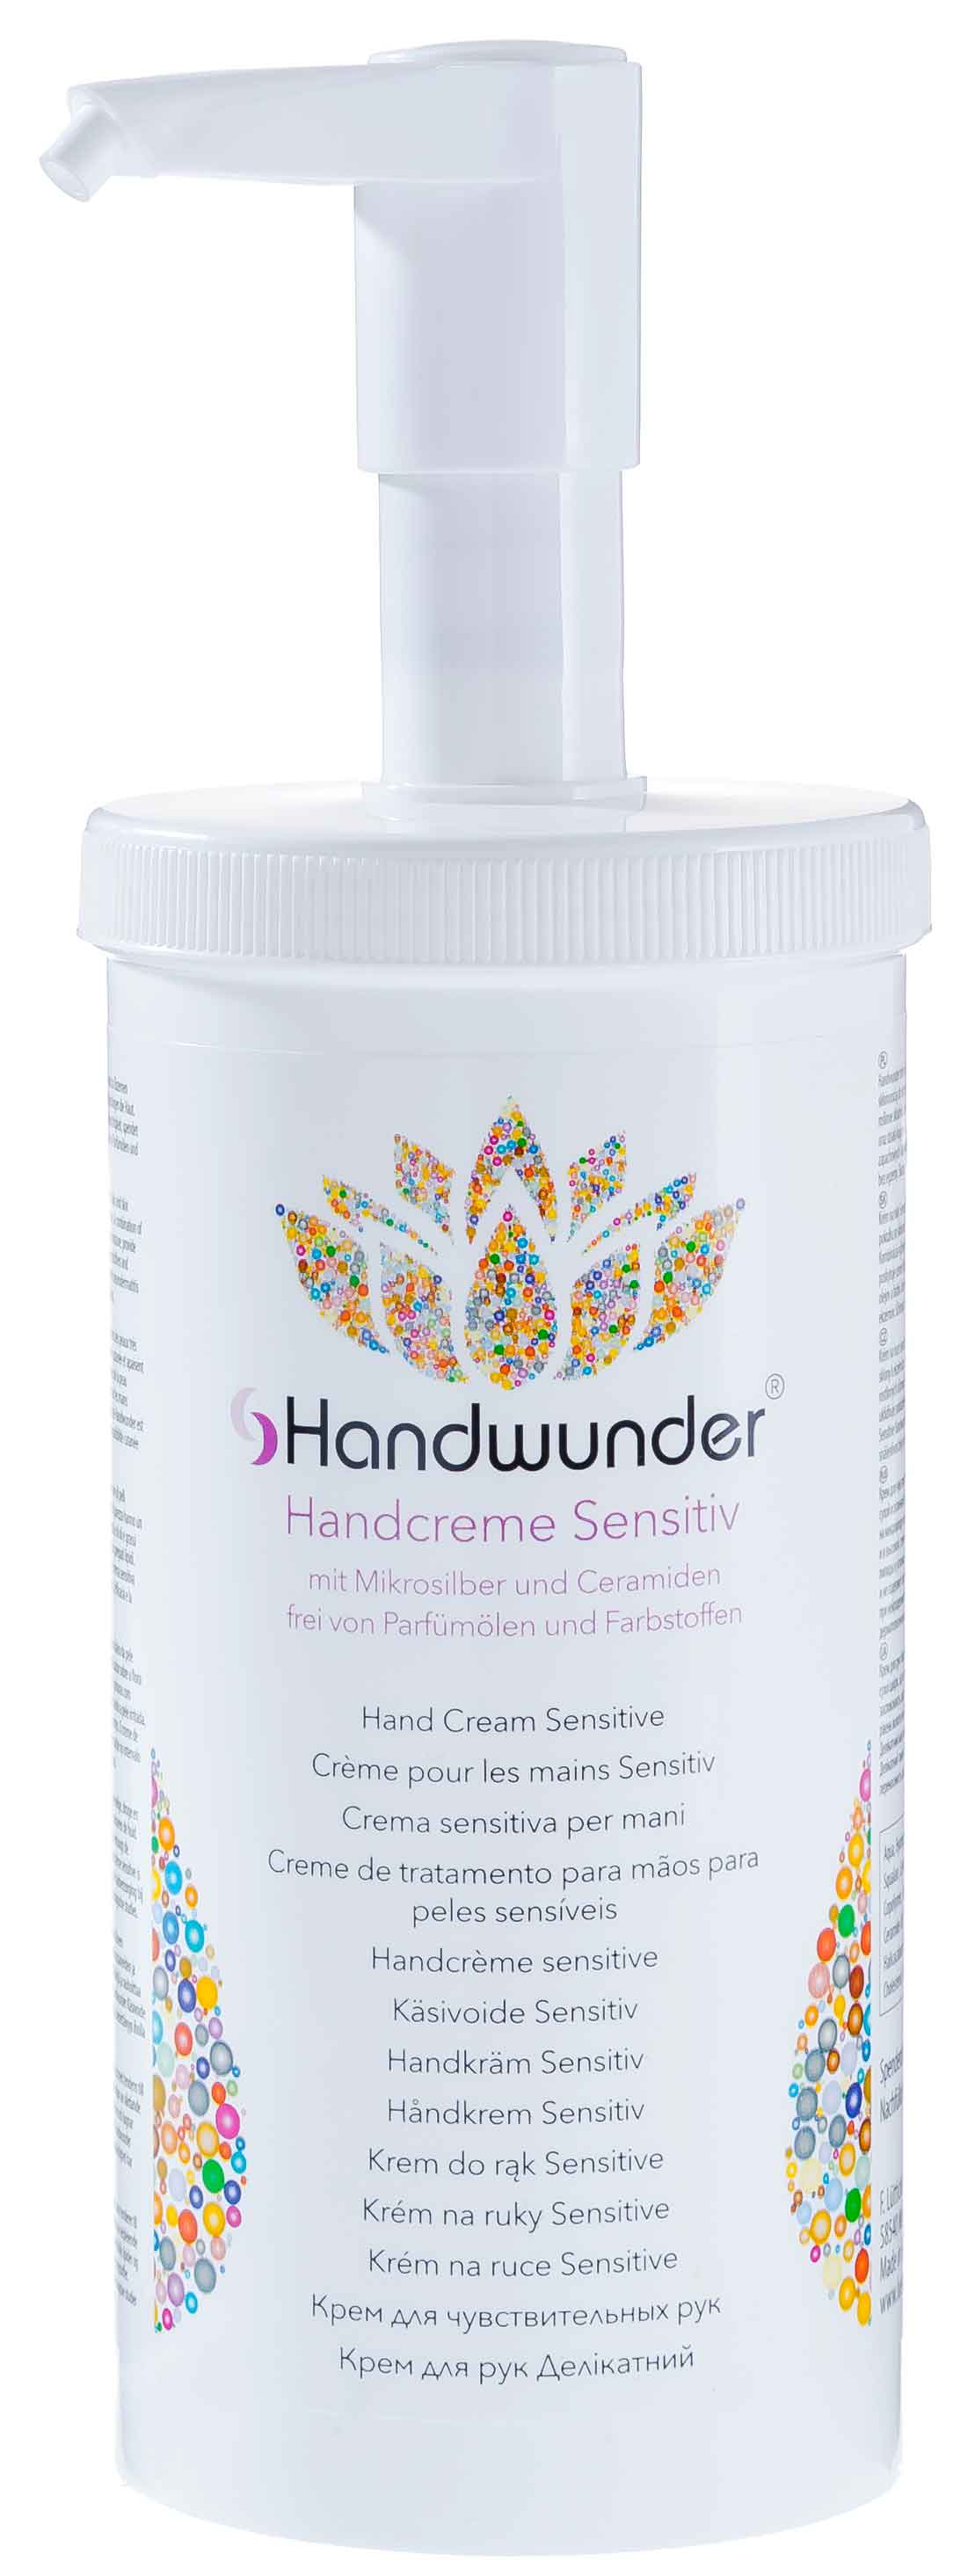 Handwunder Handcreme Sensitiv 450 ml Spenderdose